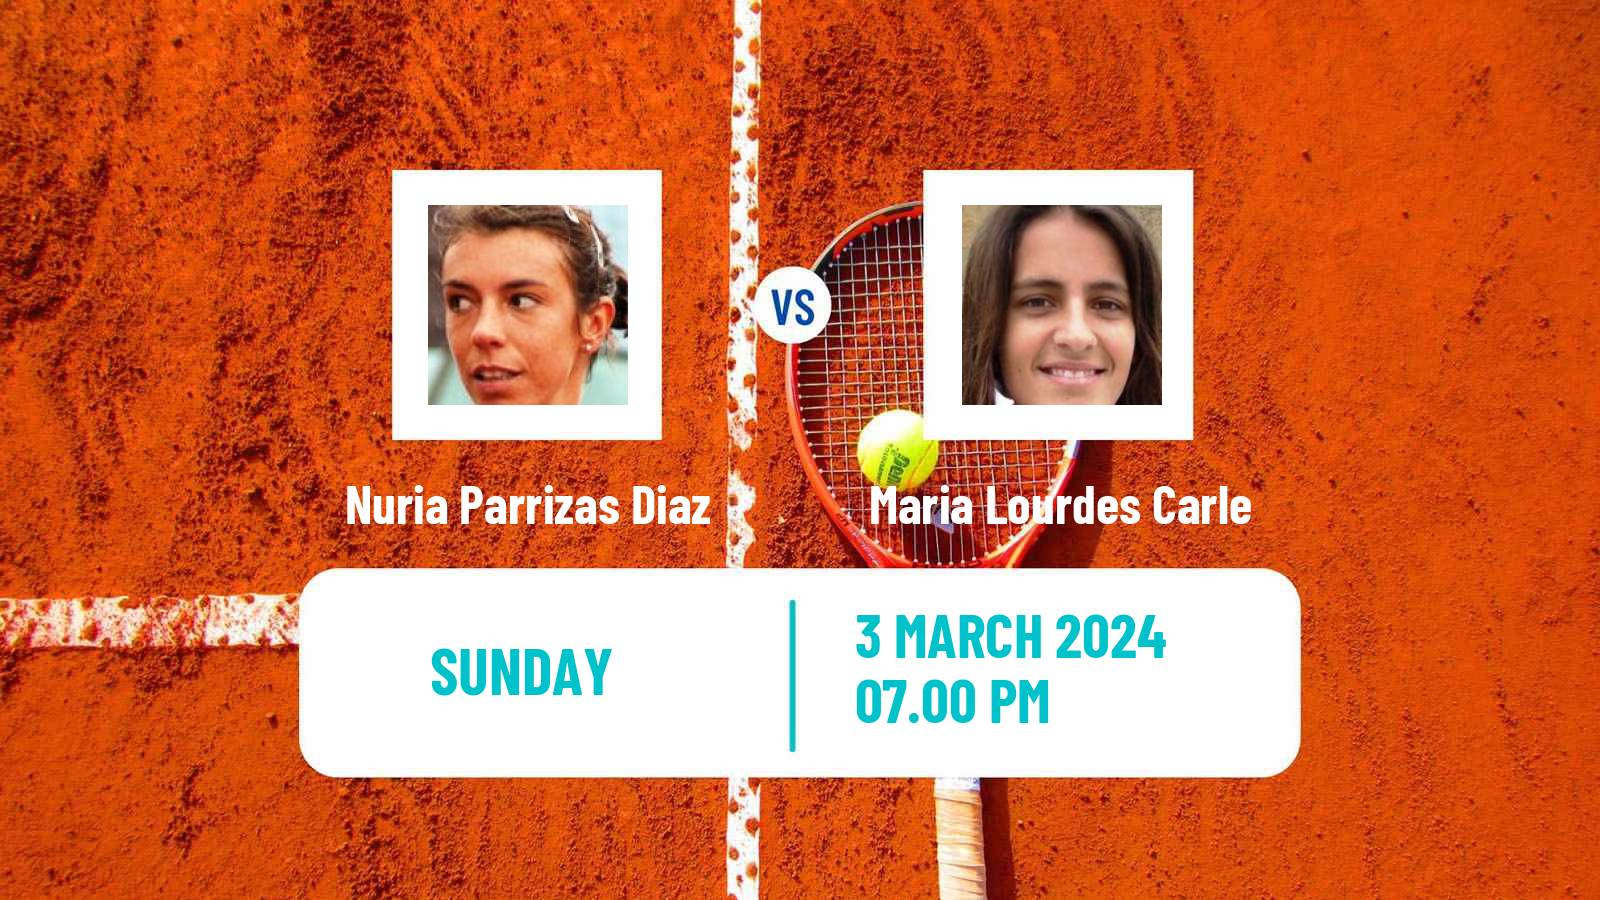 Tennis WTA Indian Wells Nuria Parrizas Diaz - Maria Lourdes Carle